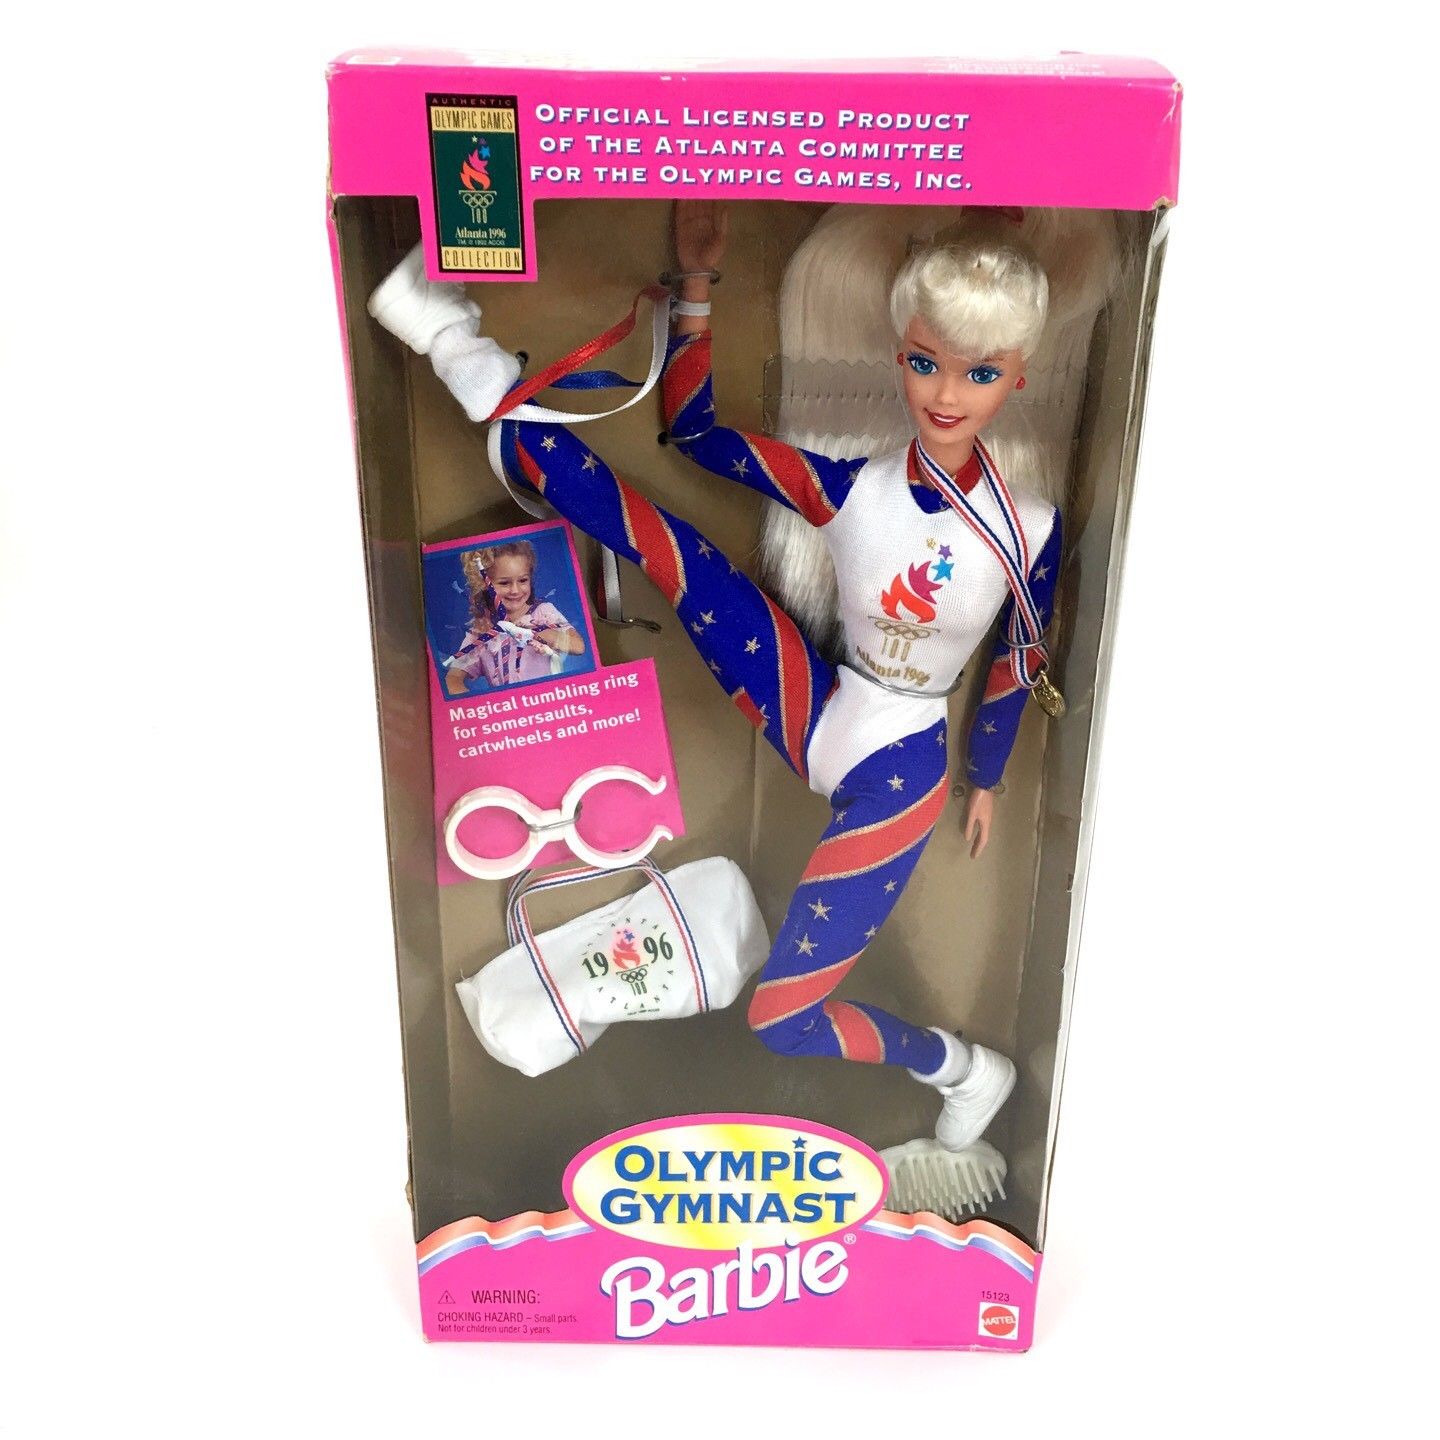 Olympic Gymnast Barbie “Blonde” (Authentic Atlanta Games 1996 